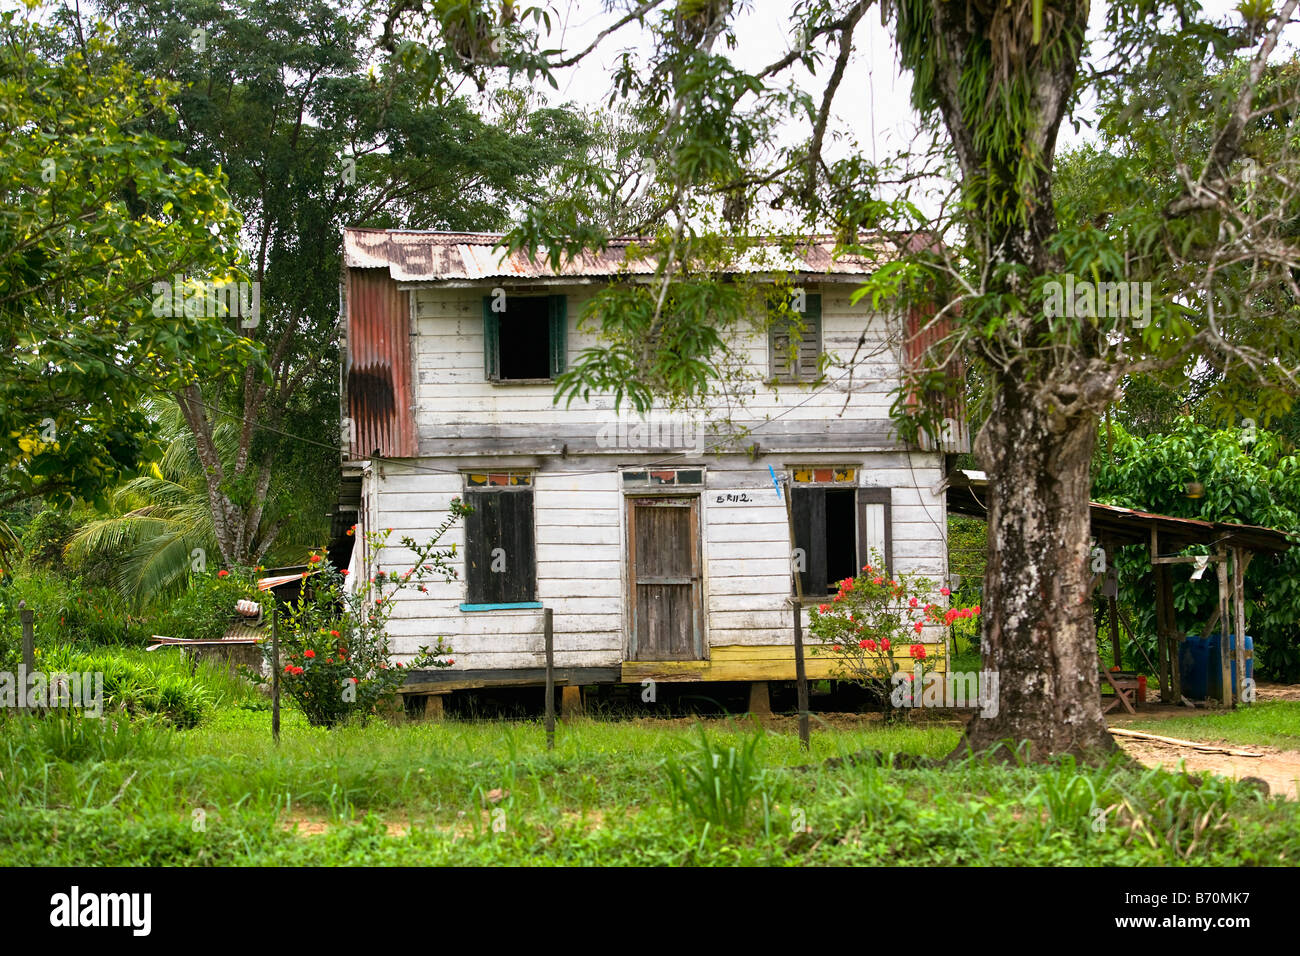 Surinam, Paramaribo, antigua casa de campo Fotografía de stock - Alamy